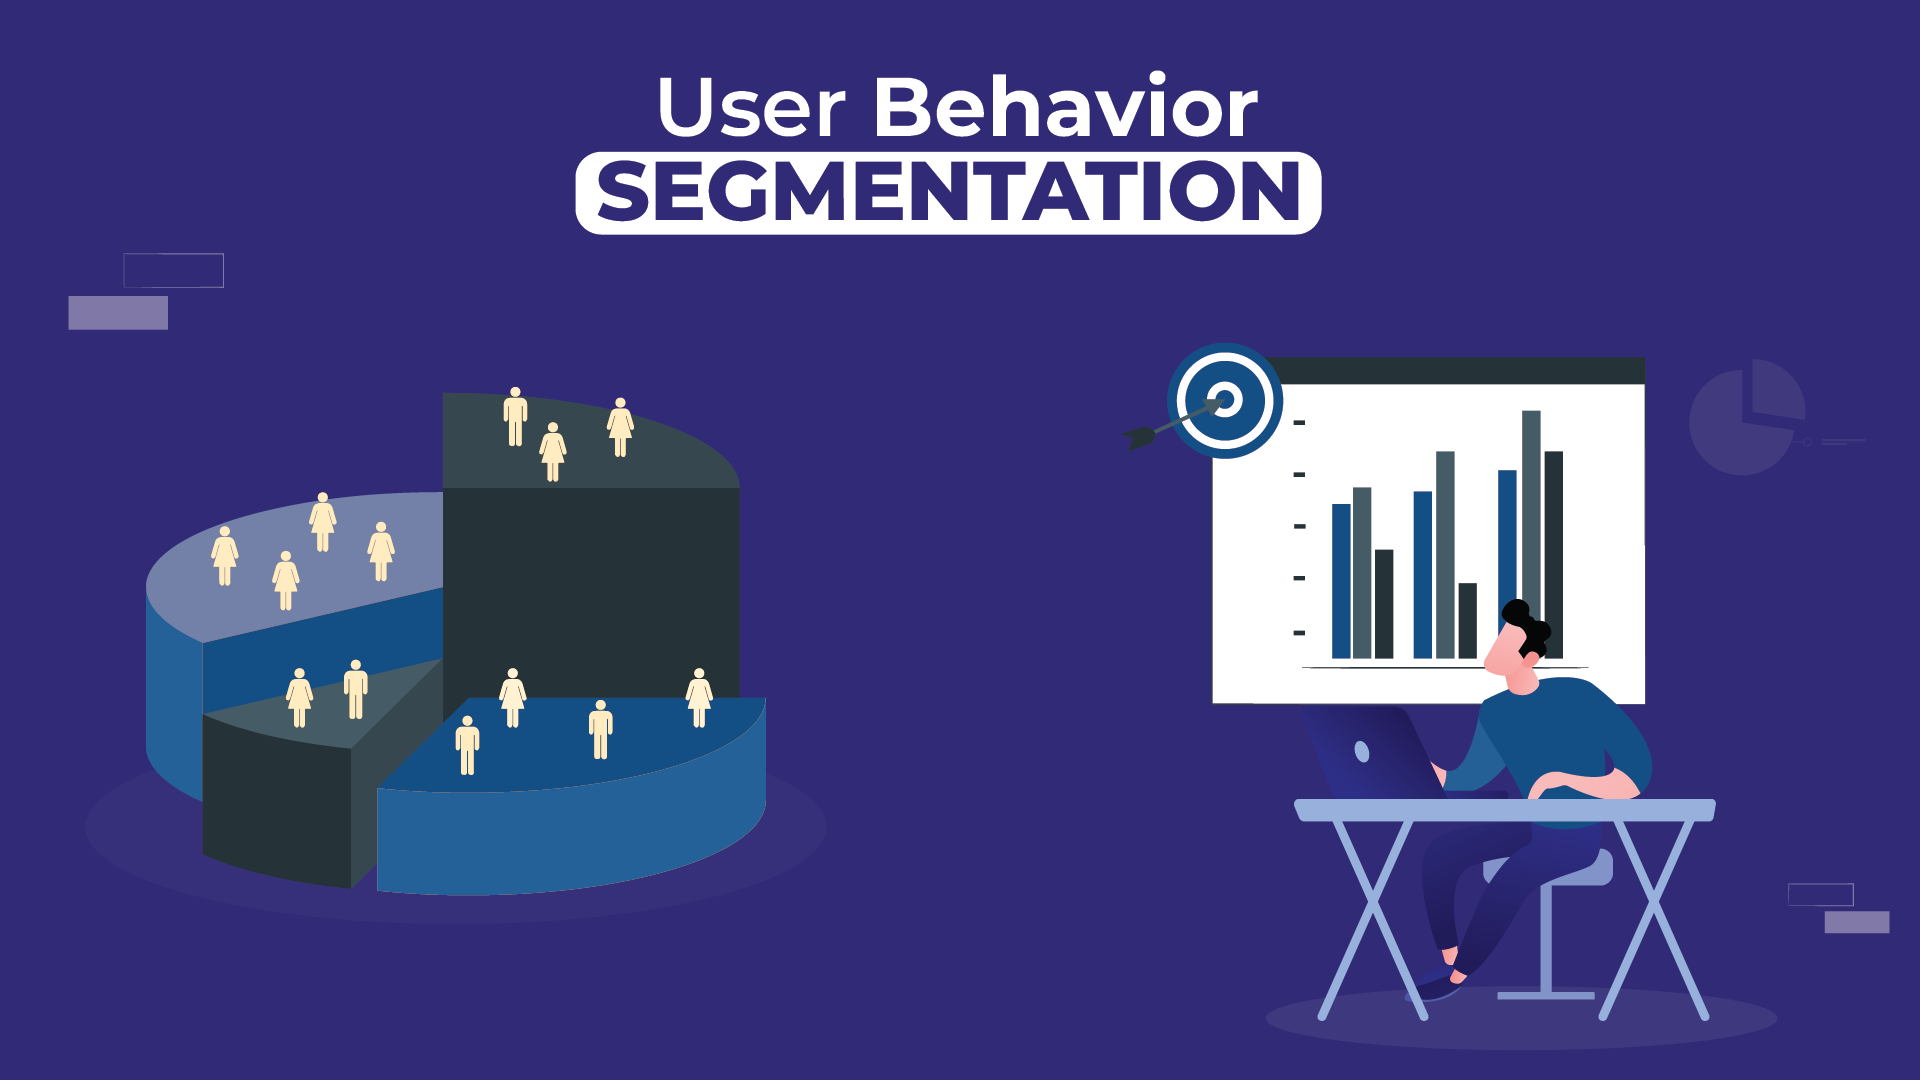 User behavior segmentation